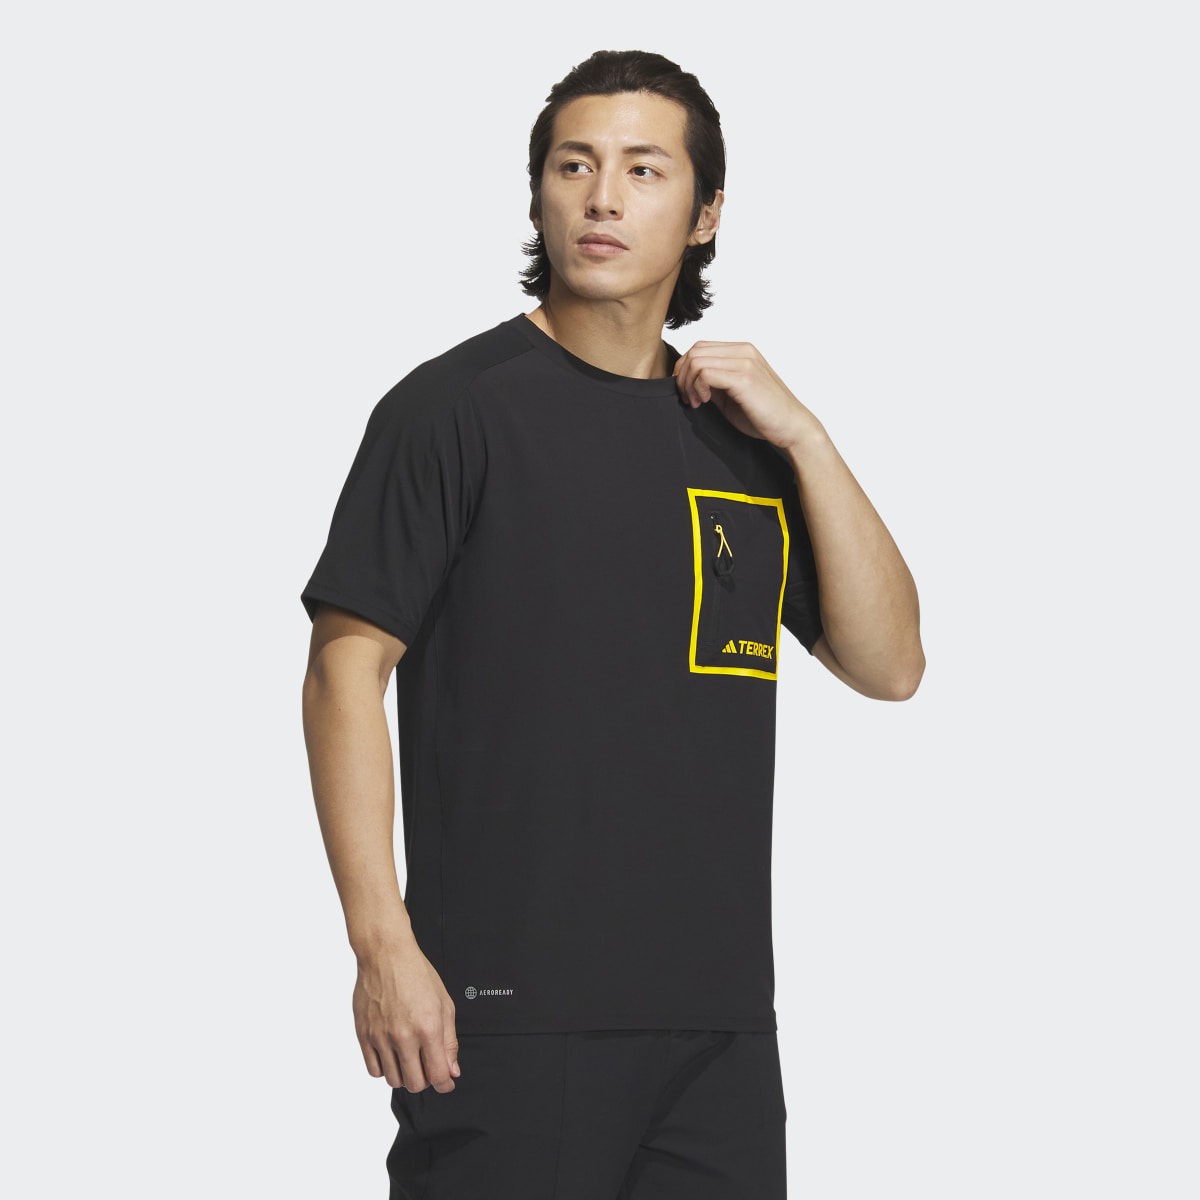 Adidas T-shirt National Geographic Short Sleeve. 4